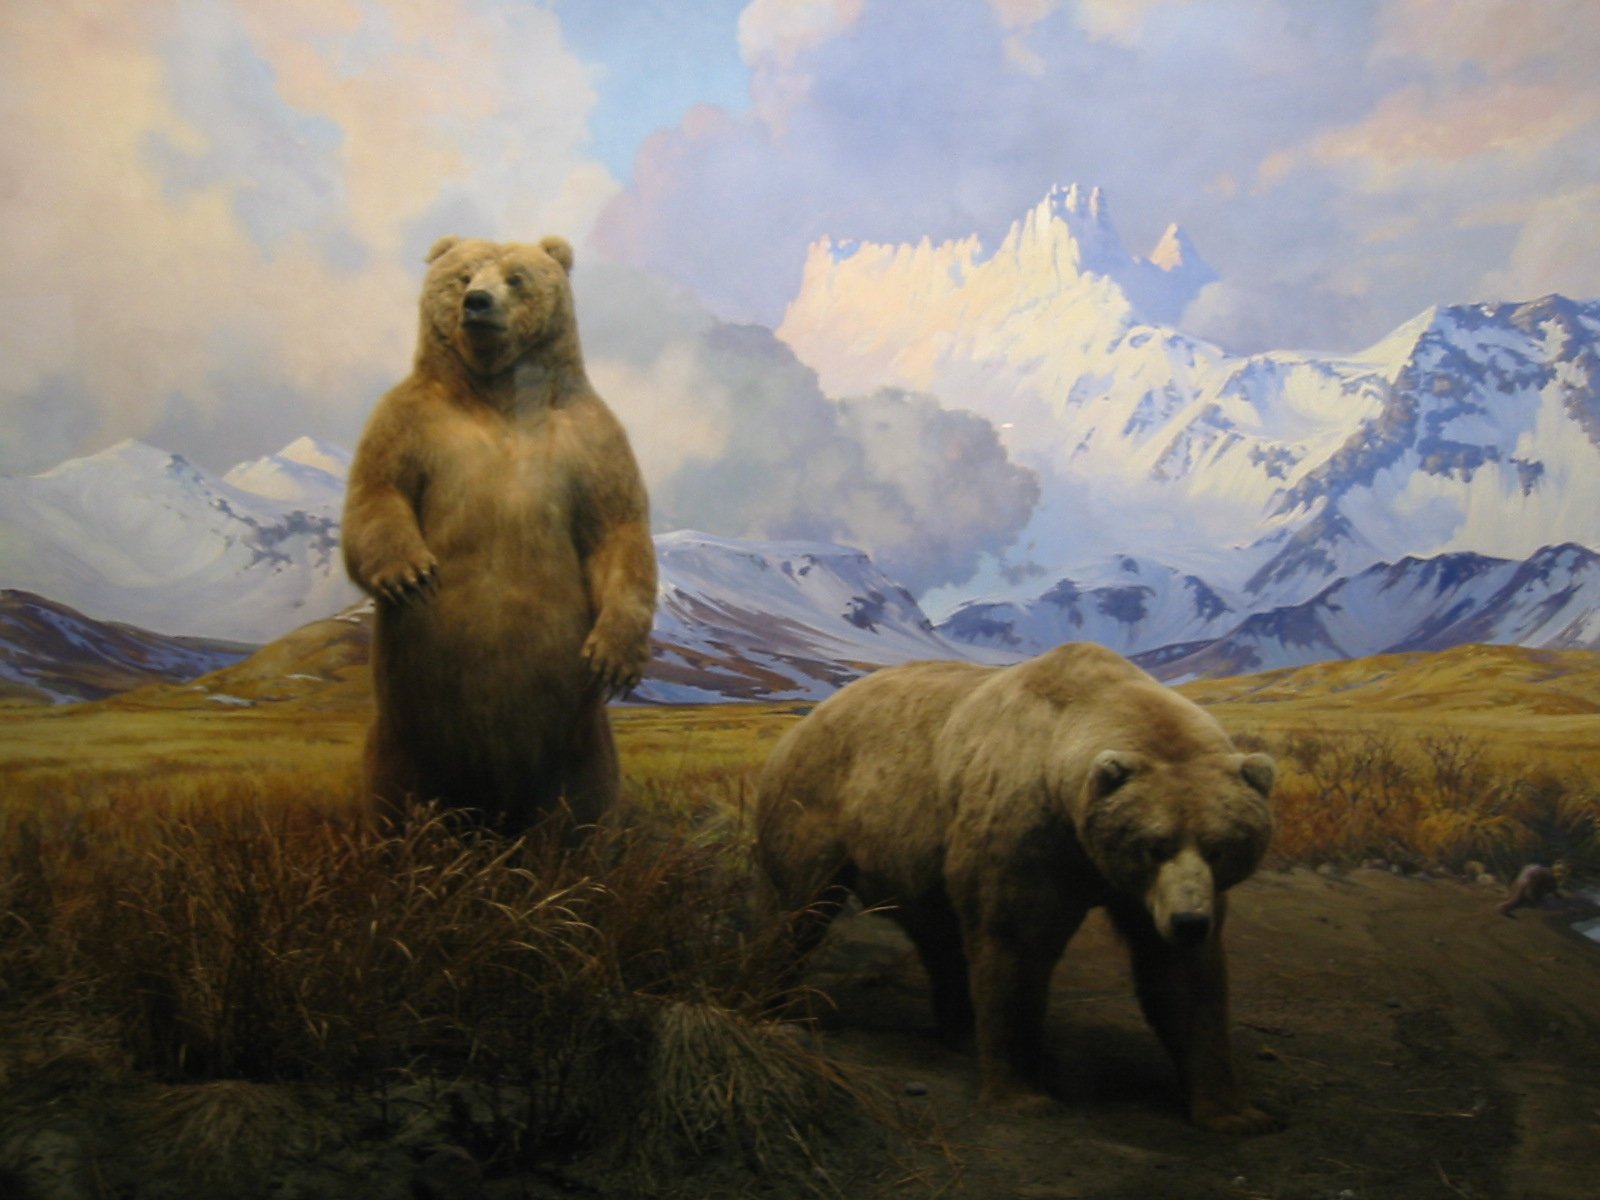 Grizzly bear mountain scene photo